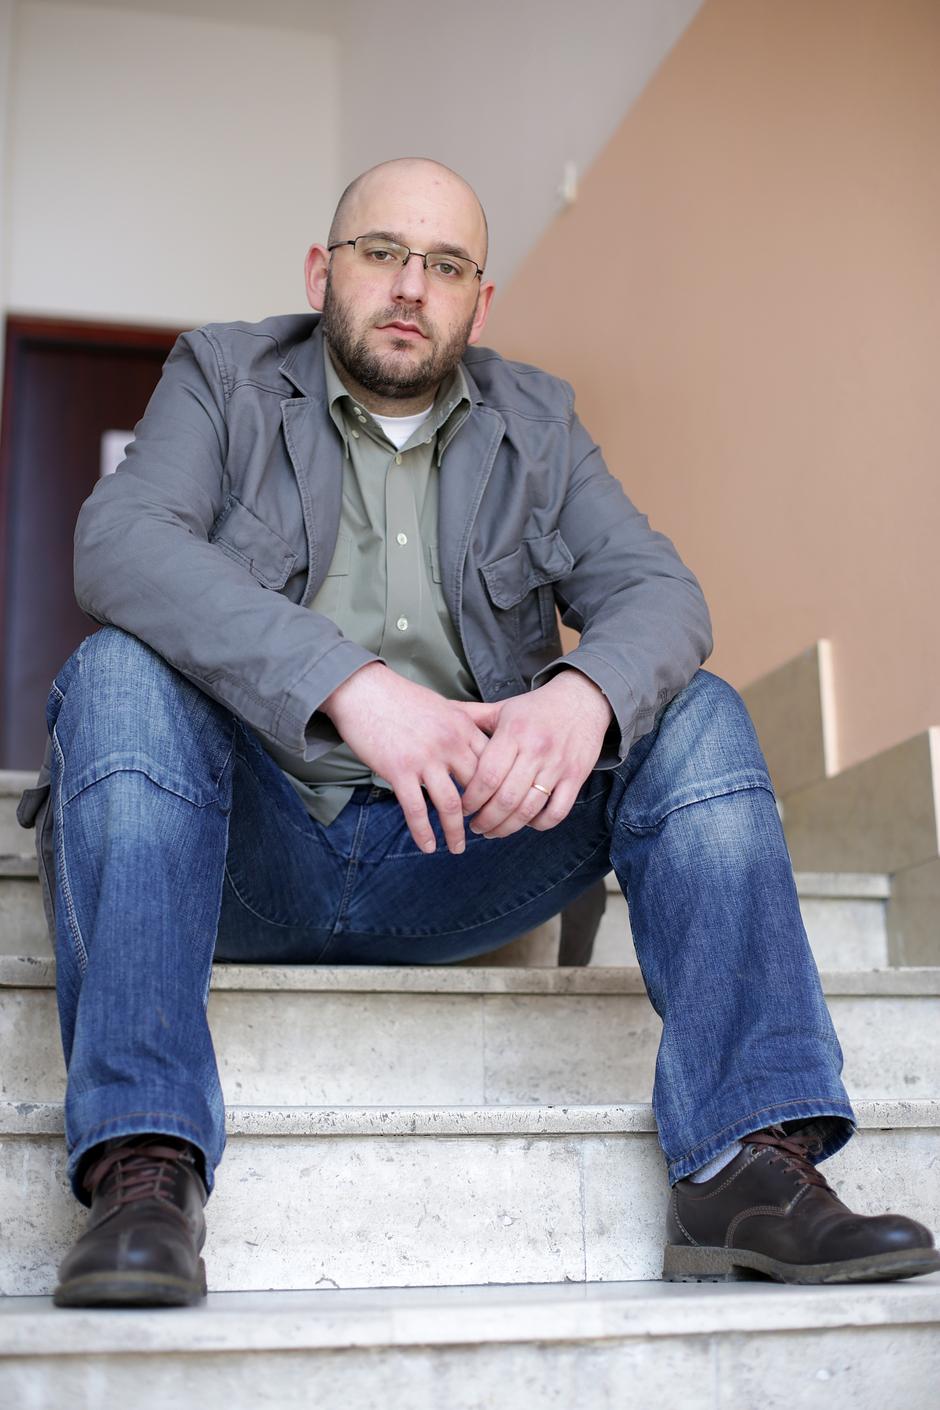 Stevo Đurašković | Author: Luka Stanzl (PIXSELL)